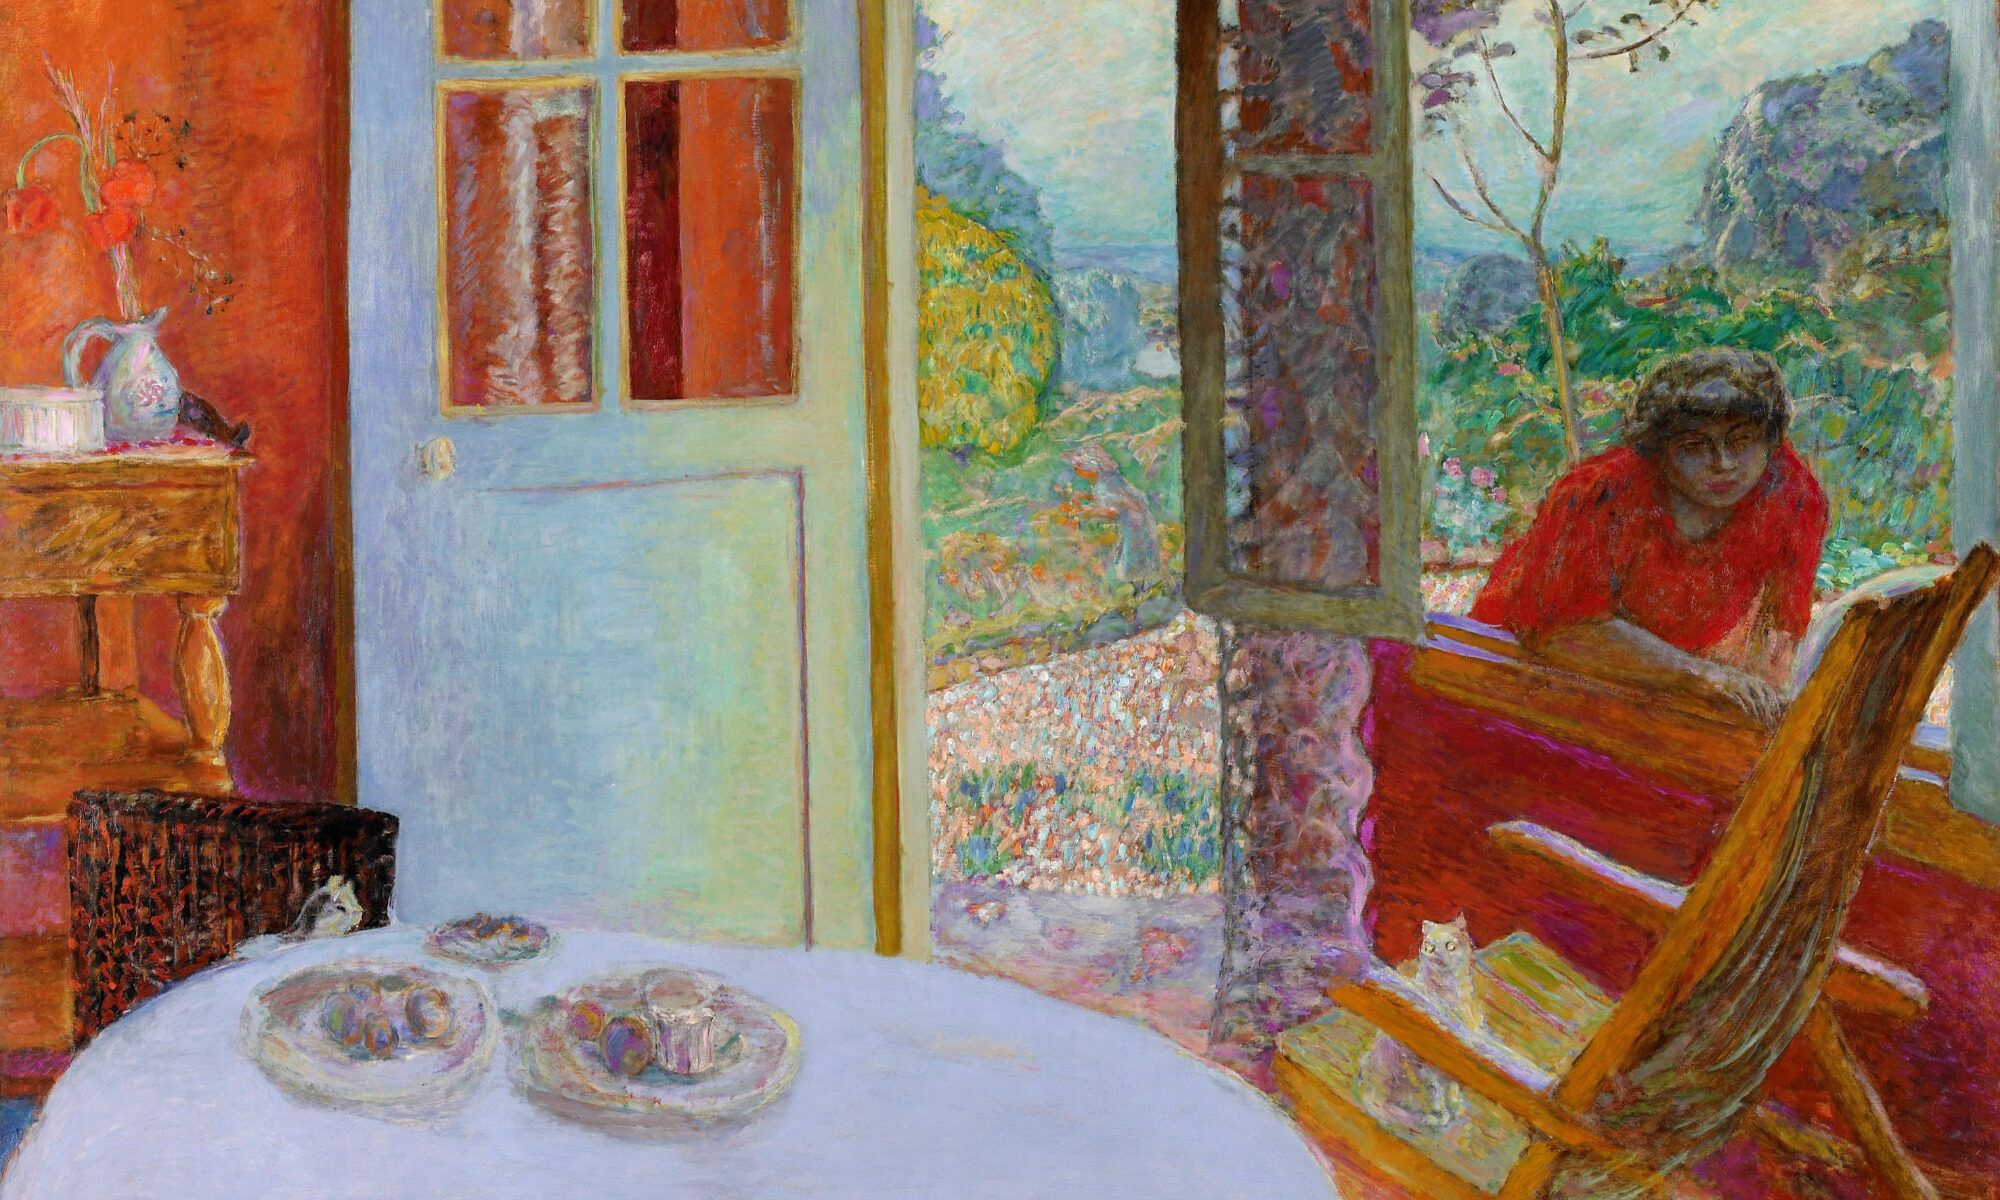 Jadalnia na wsi, Pierre Bonnard, 1934-1935.